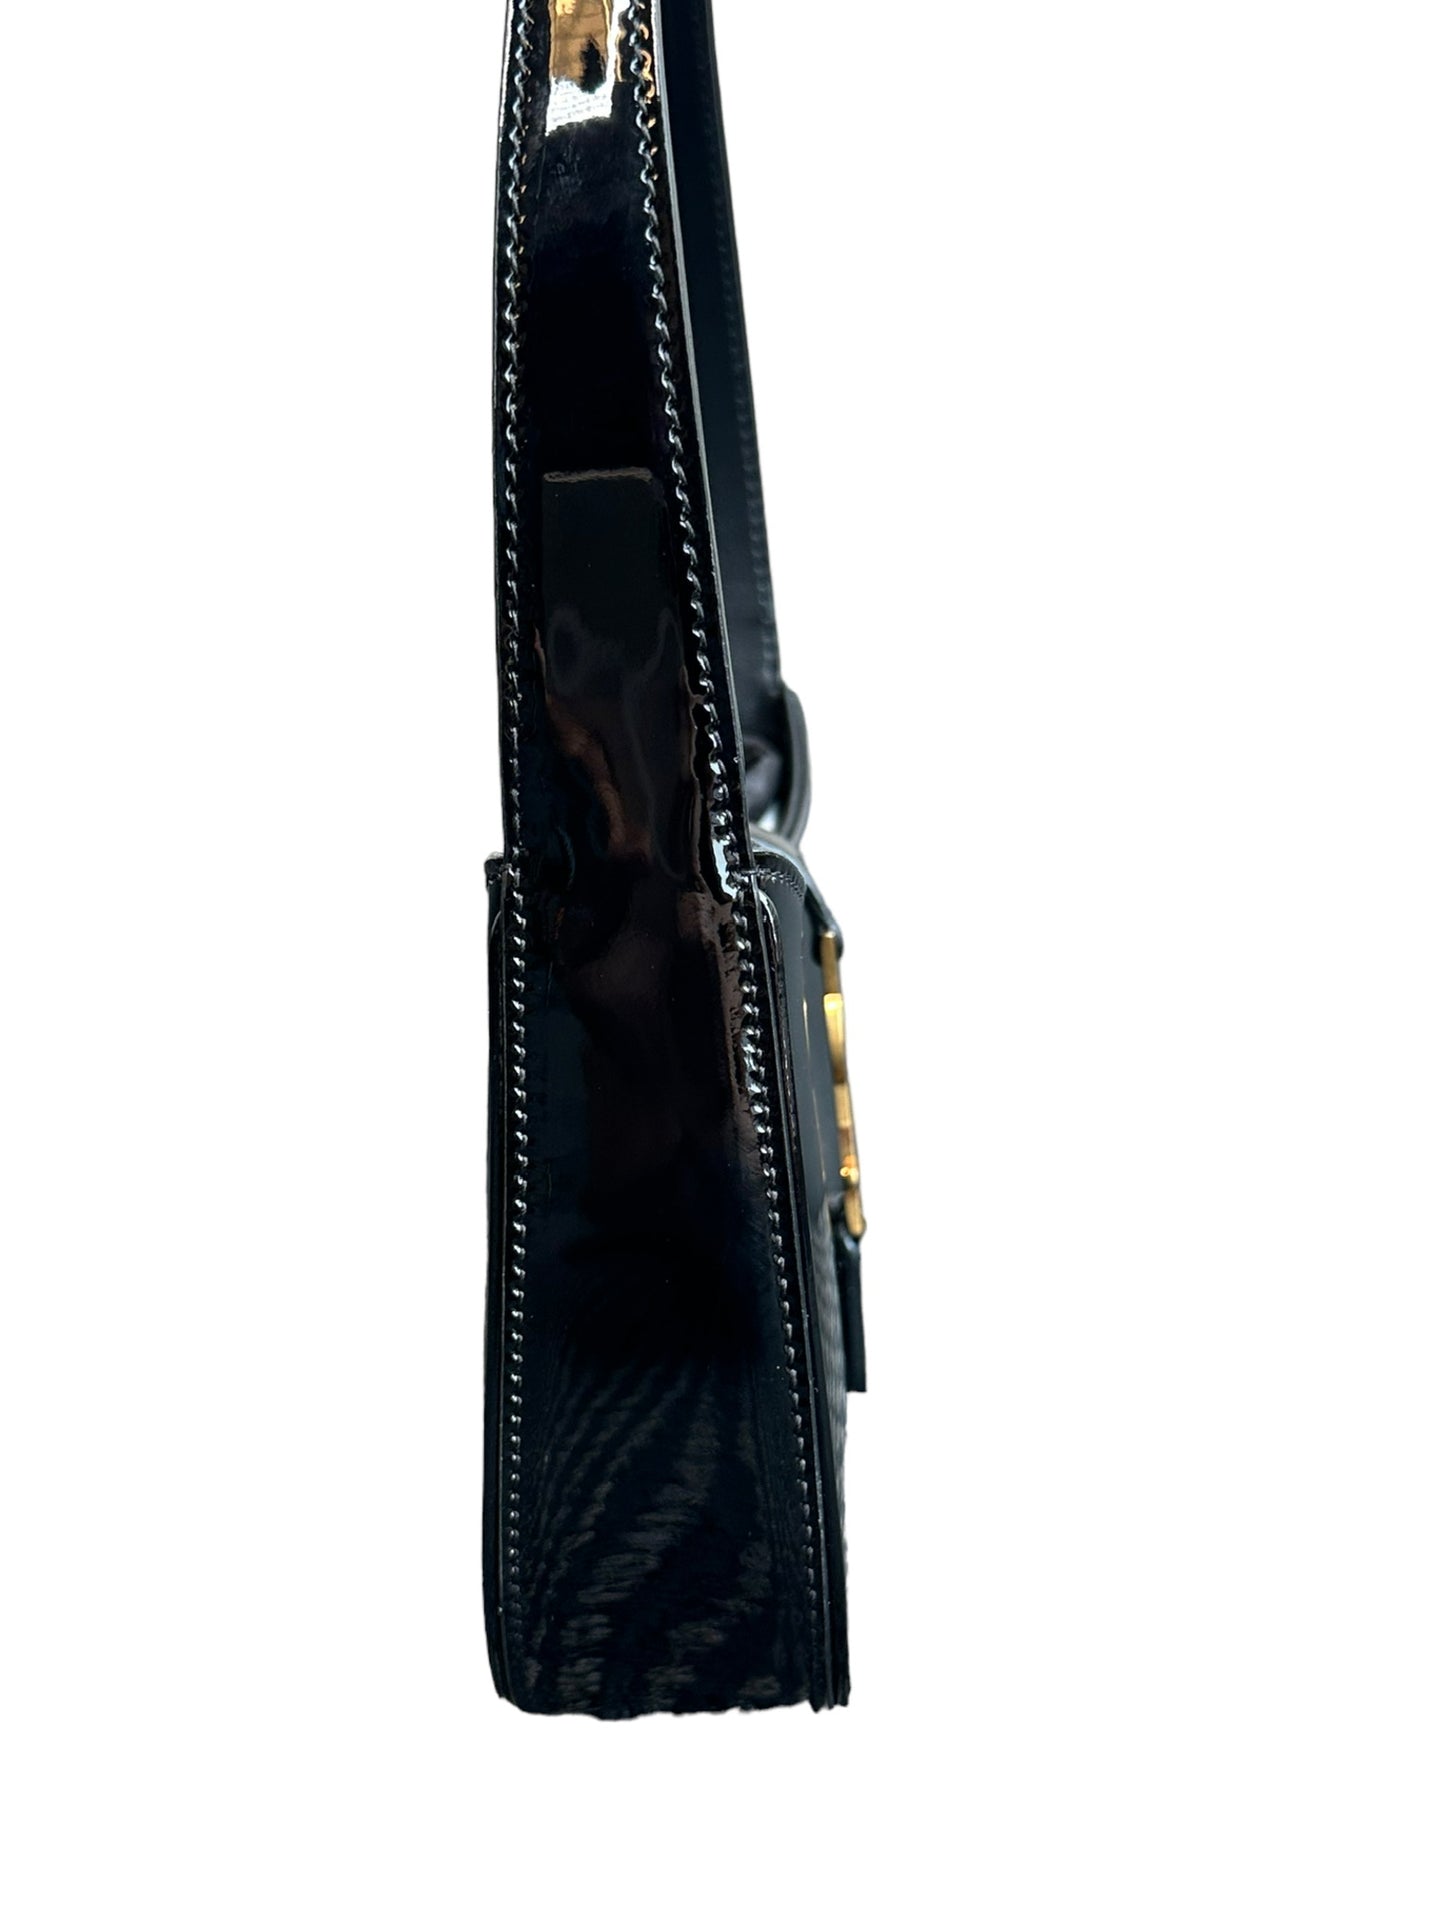 SAINT LAURENT - Black Shiny Leather Le 5 A 7 Mini Hobo